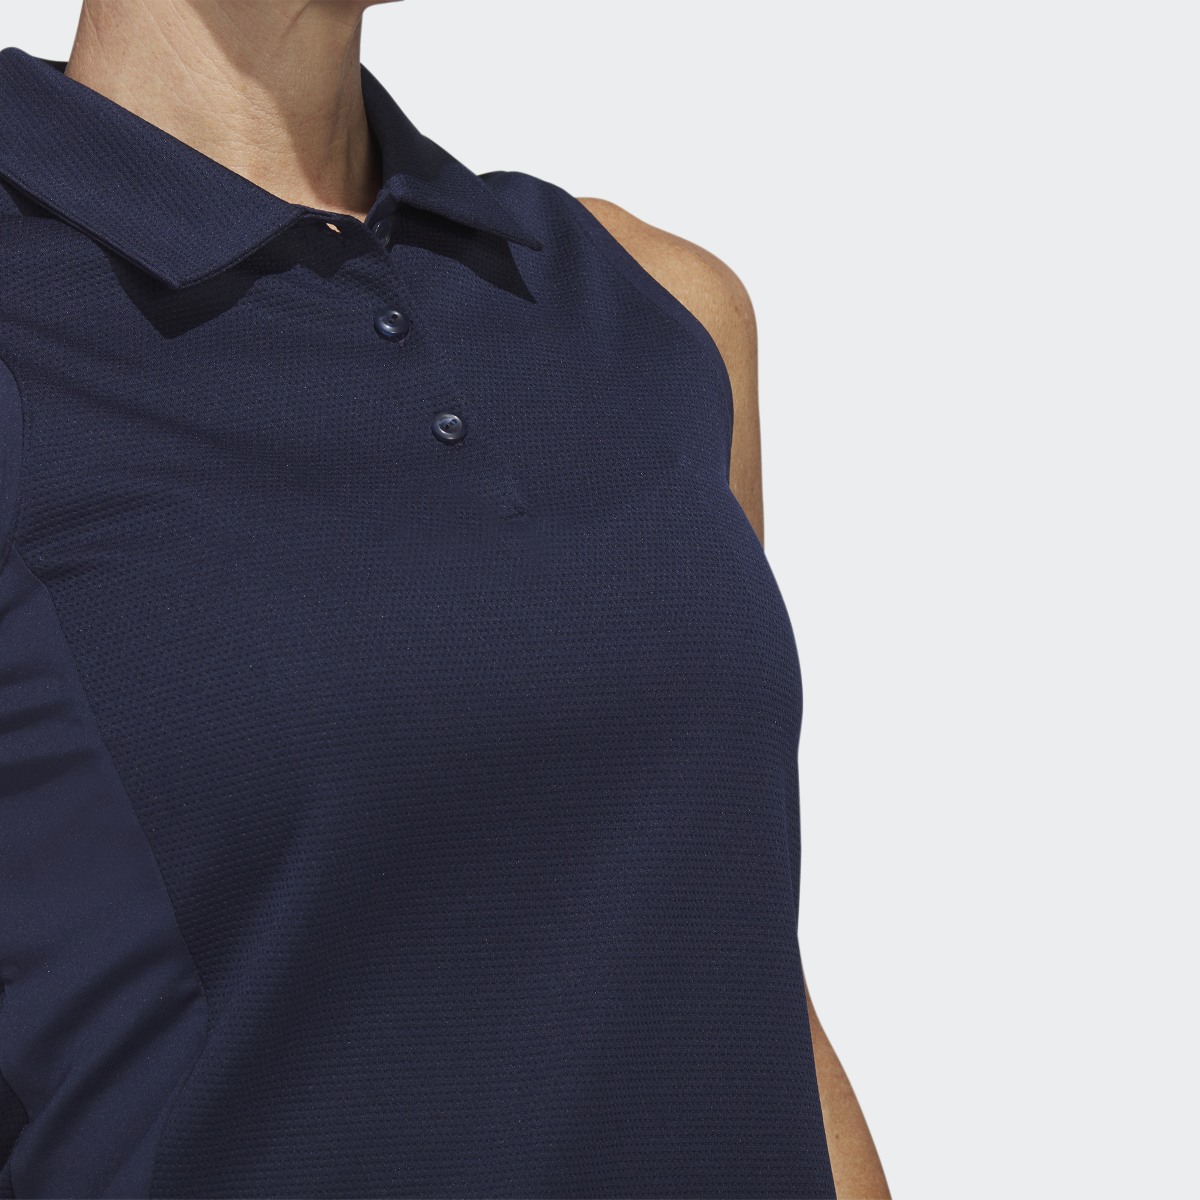 Adidas Texture Sleeveless Golf Polo Shirt. 6